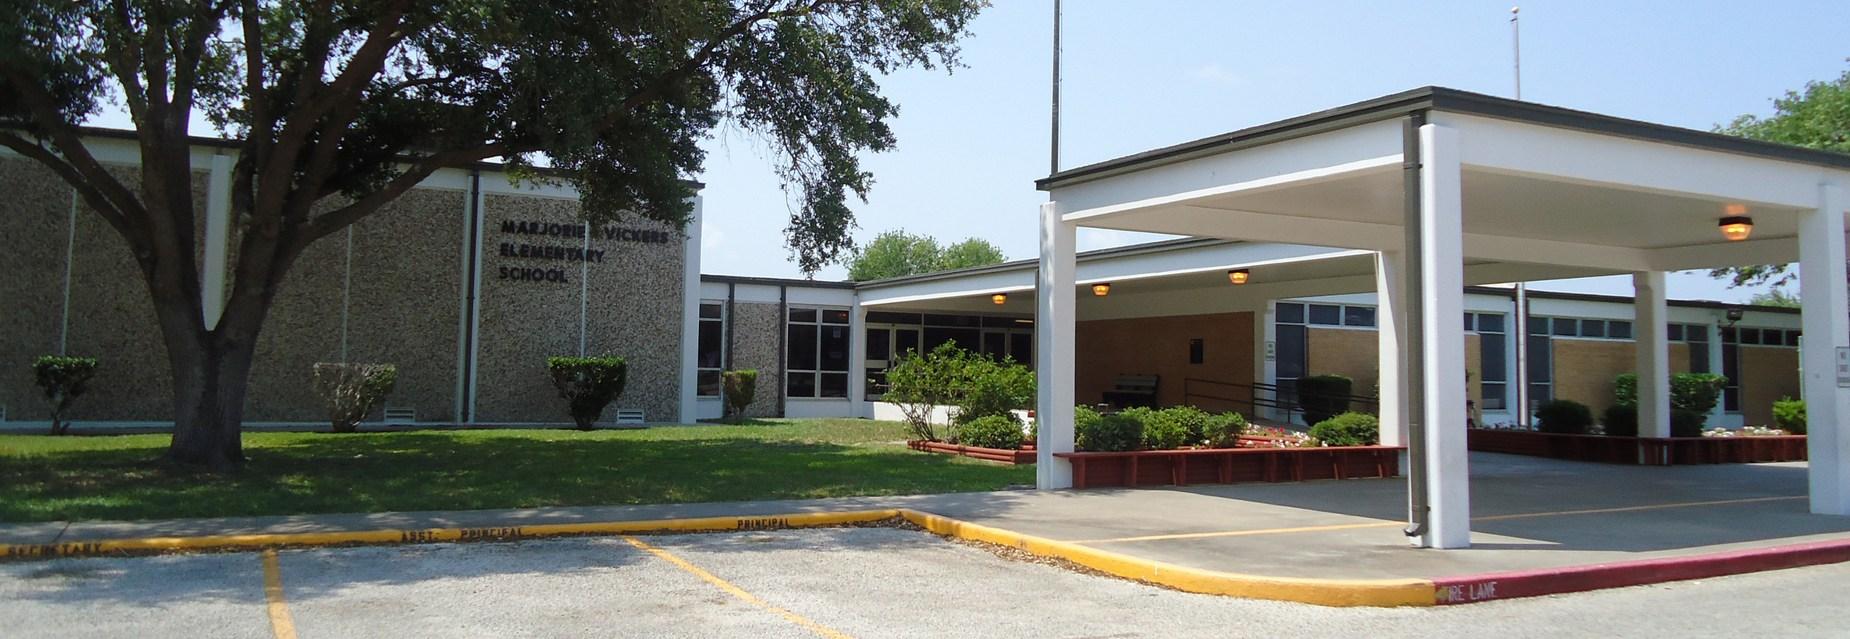 Vickers Elementary School